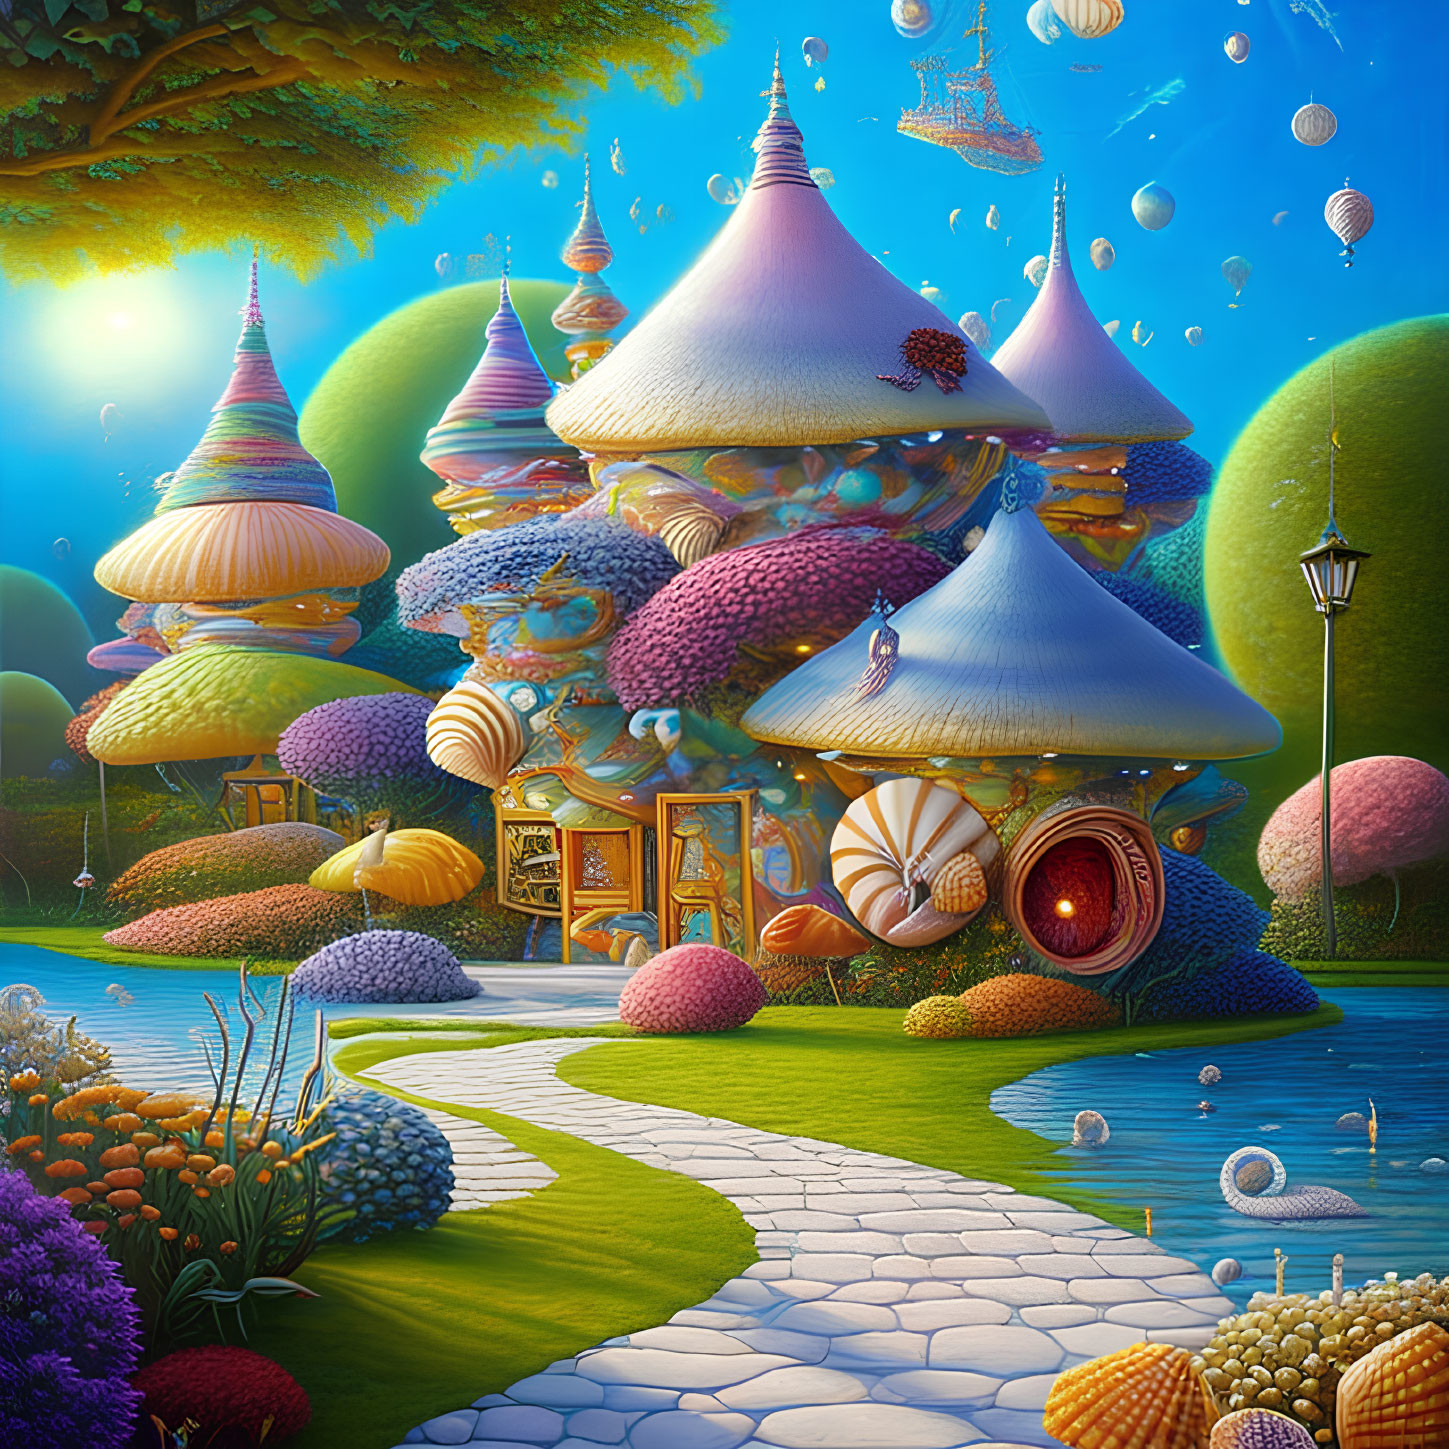 Colorful Mushroom Houses in Whimsical Fantasy Landscape